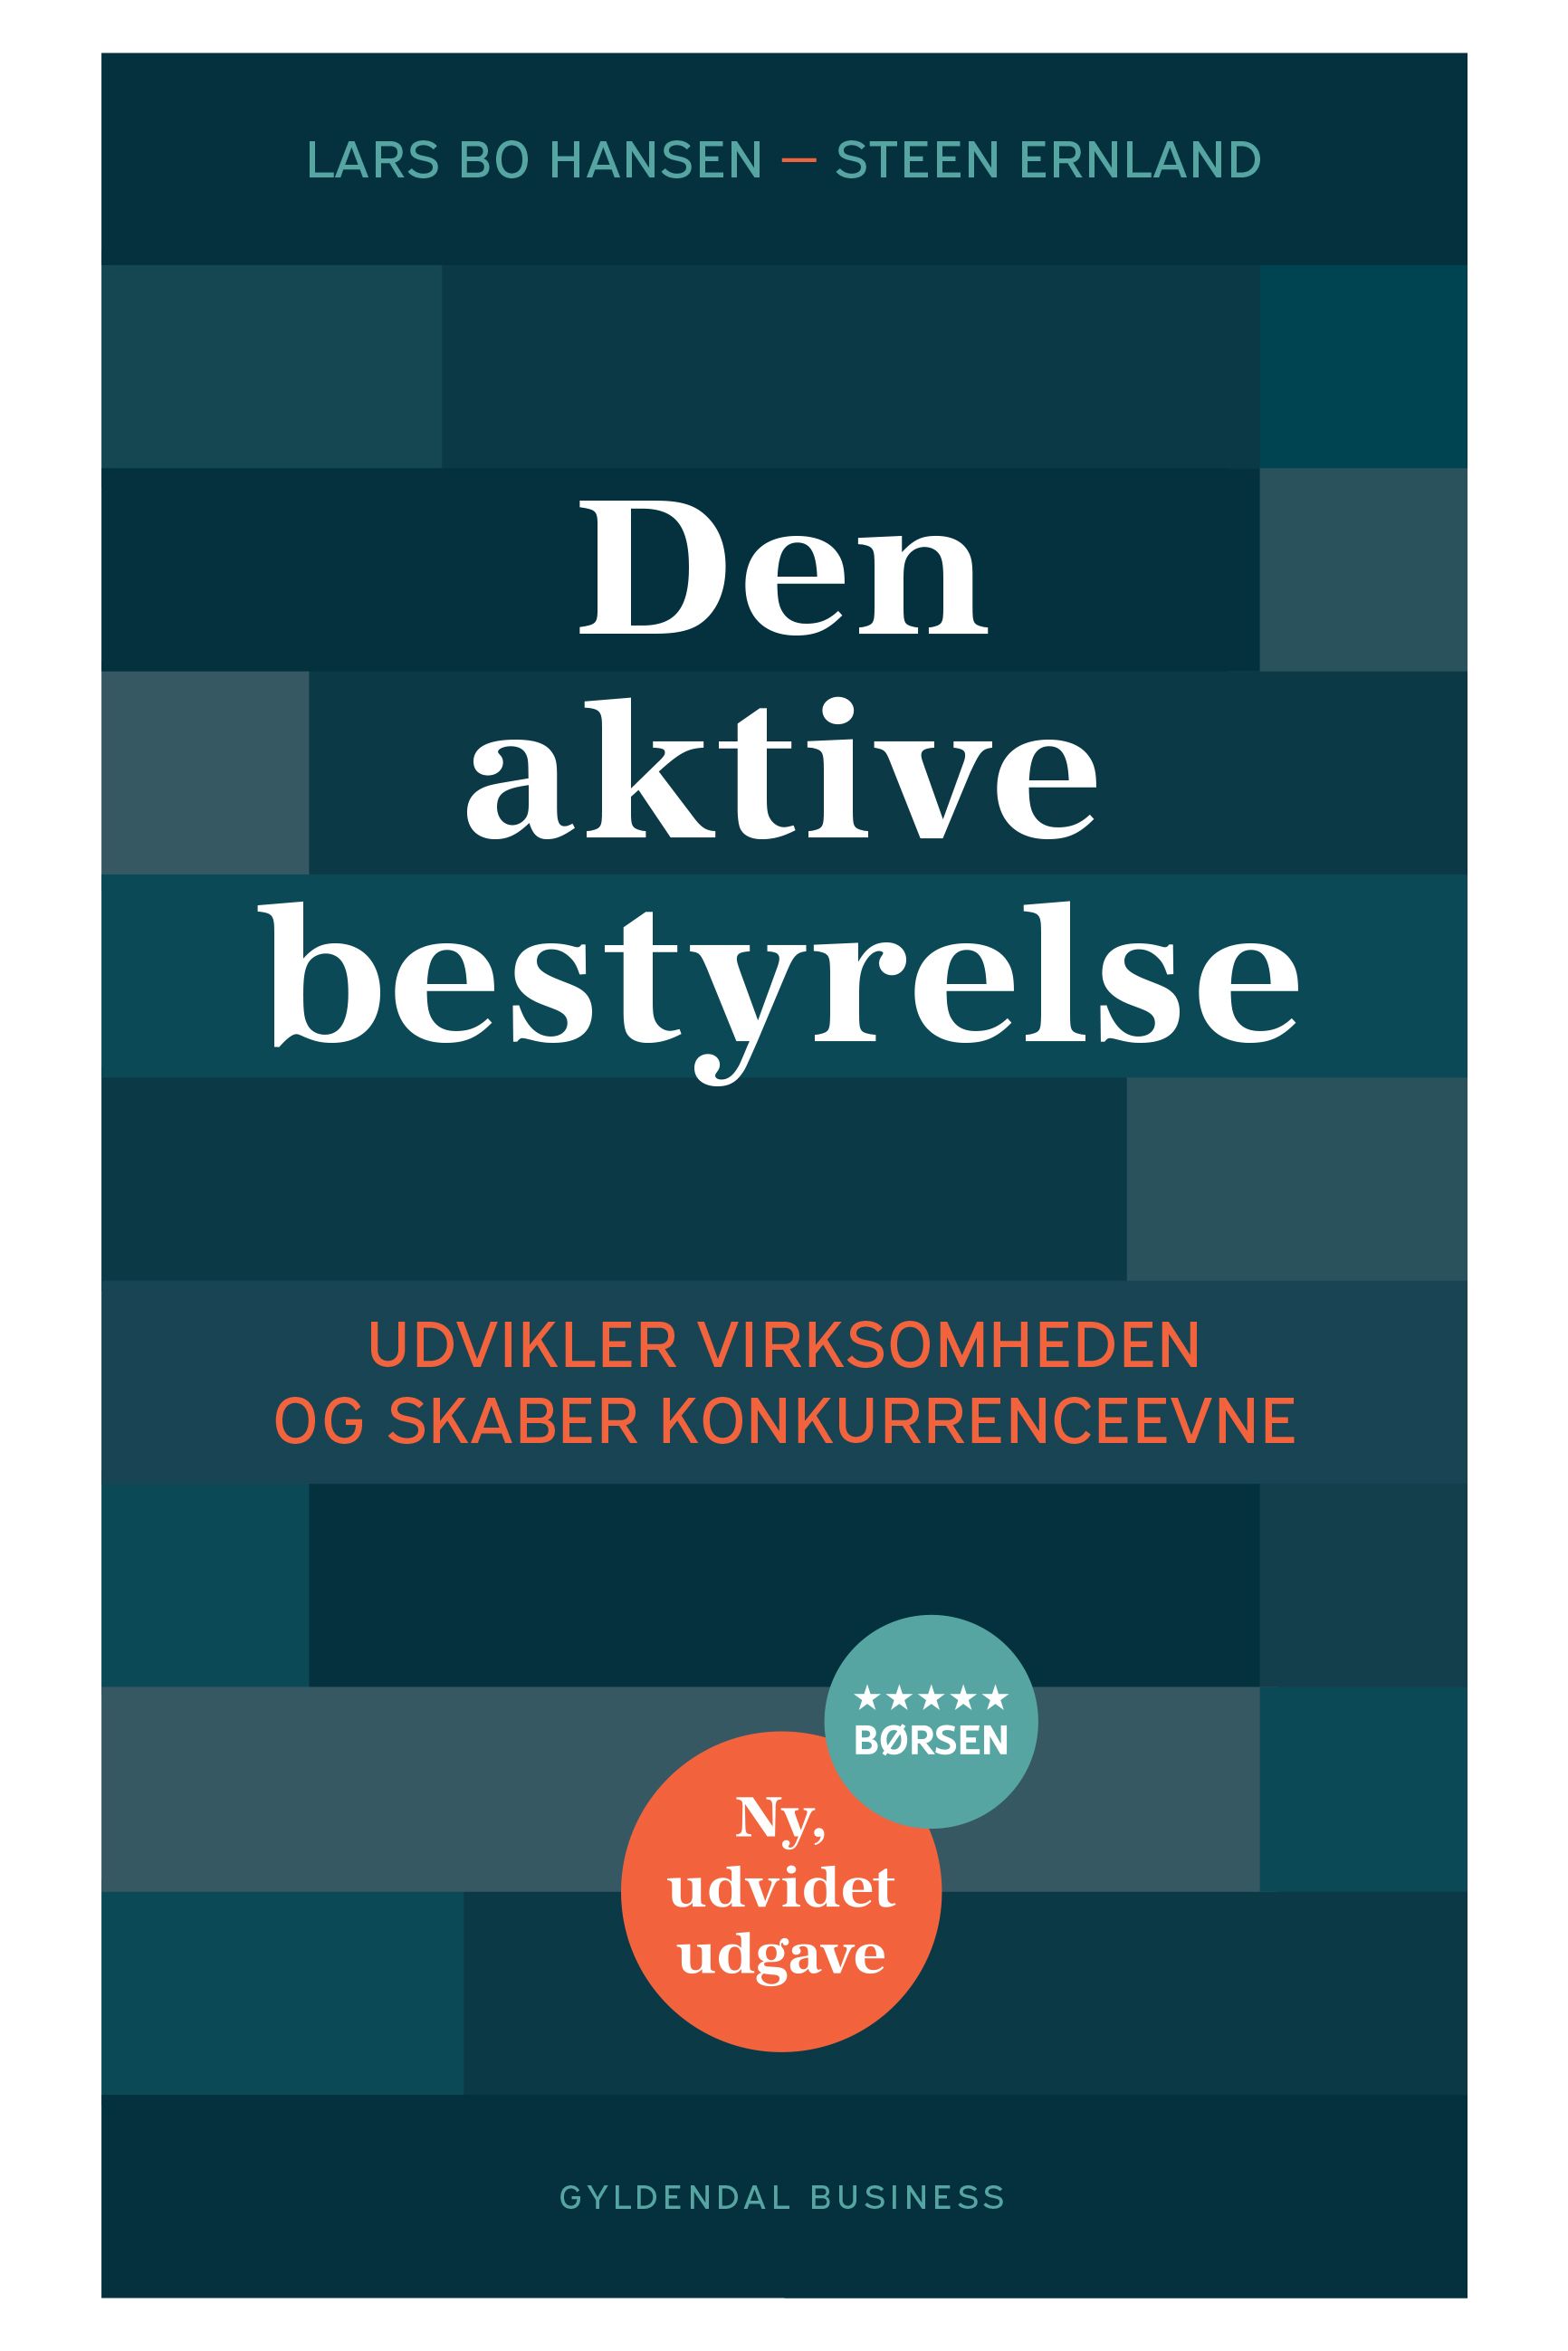 Den aktive bestyrelse, eBook by Steen Ernland, Lars Bo Hansen